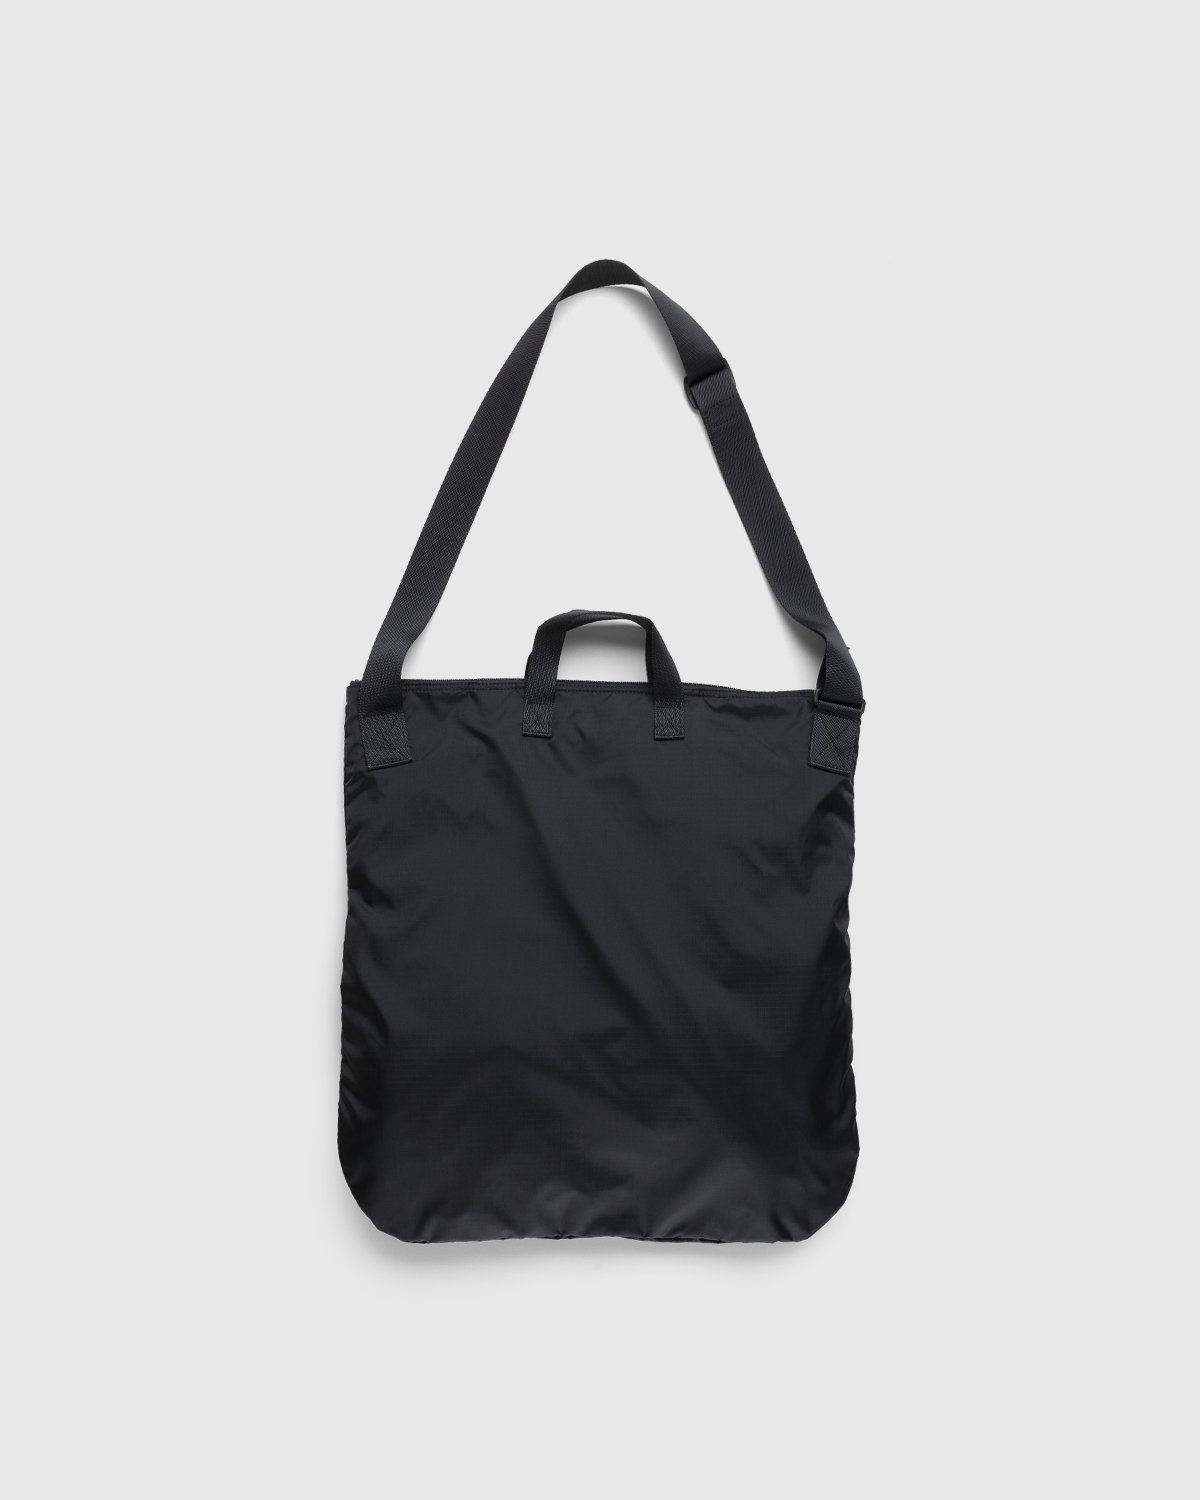 Porter-Yoshida & Co. – Flex 2-Way Helmet Bag Black | Highsnobiety Shop